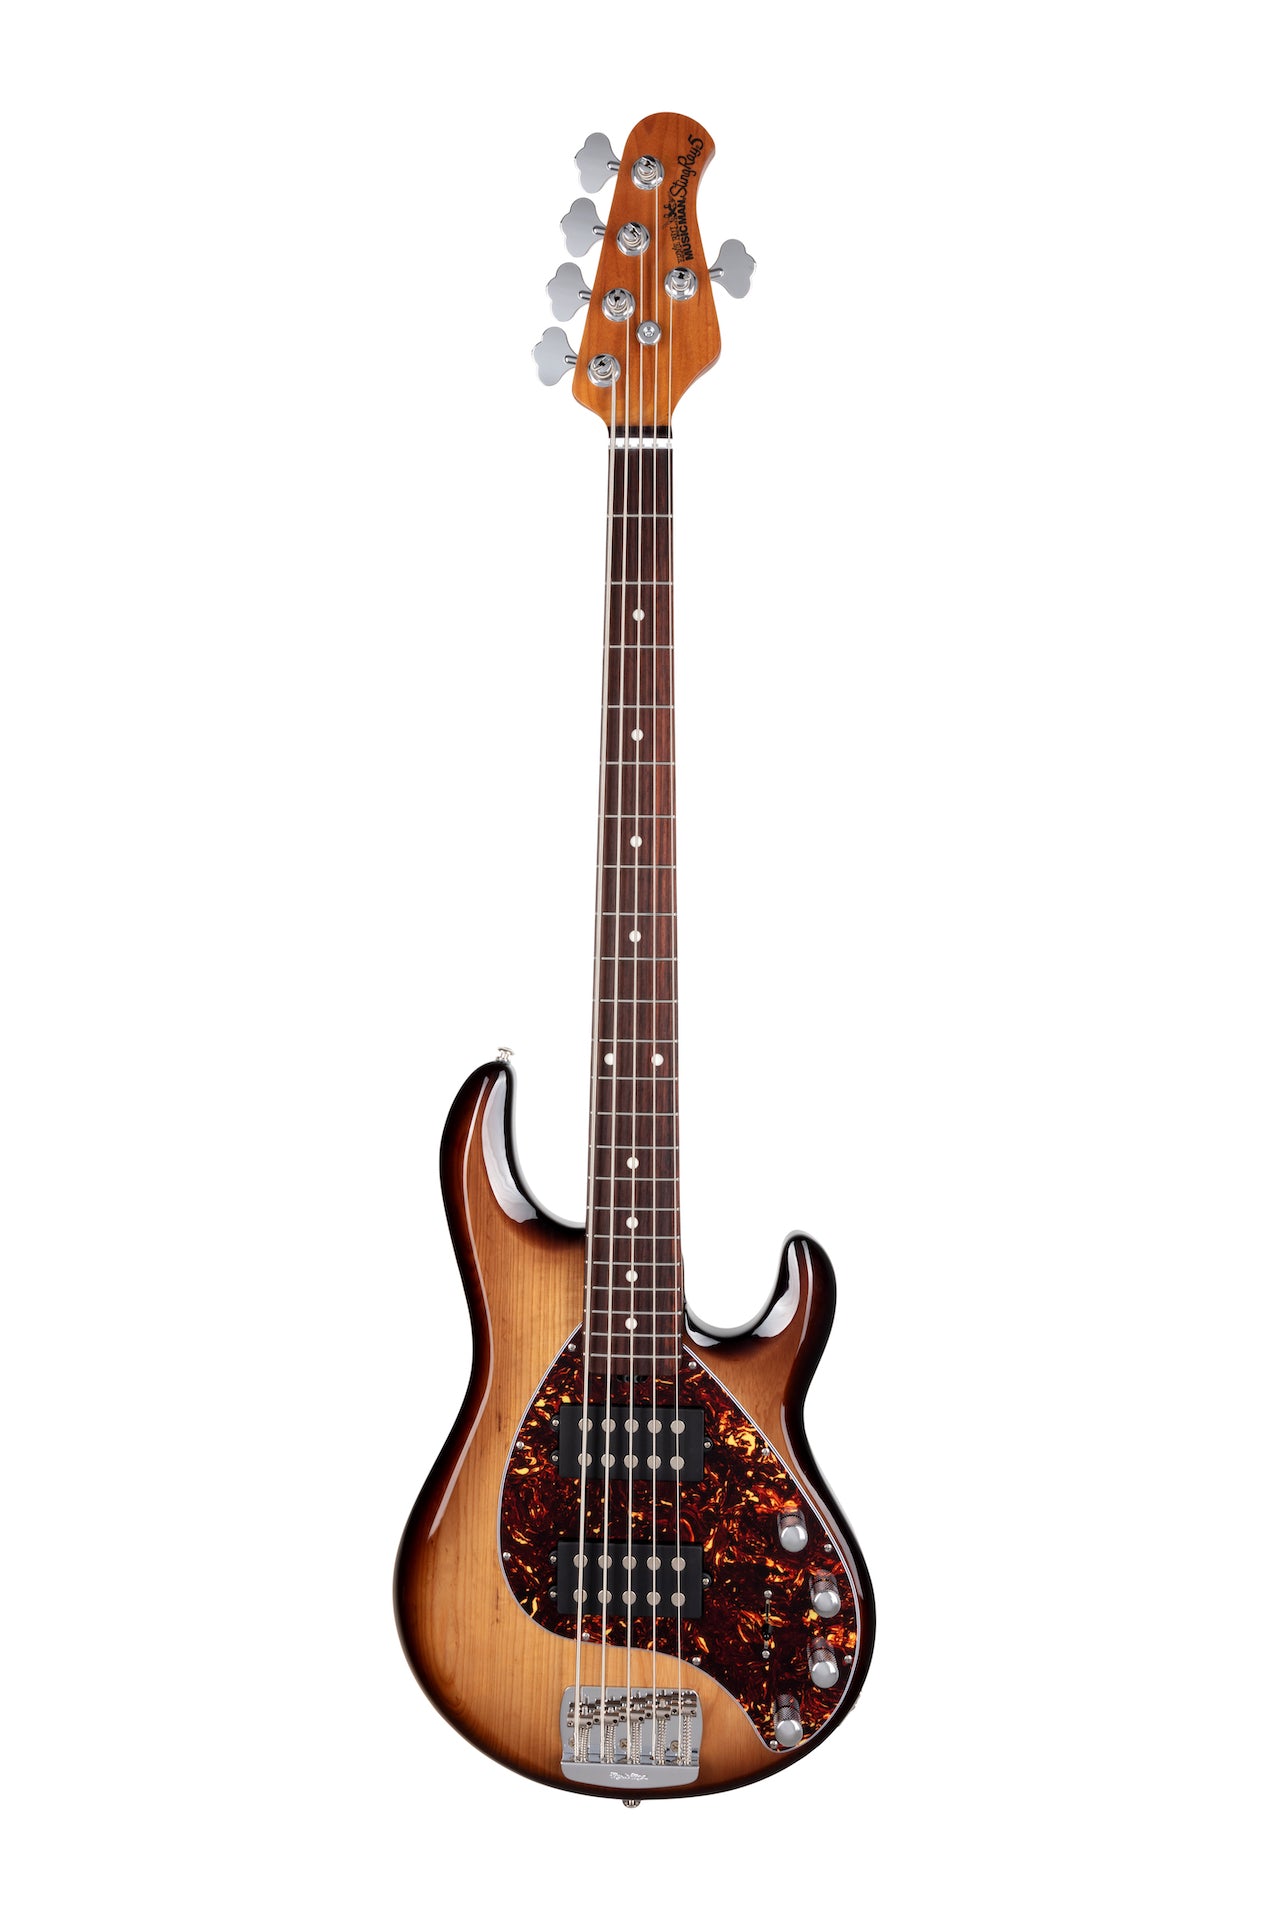 Ernie Ball Music Man StingRay Special 5 HH Bass Guitar - Burnt Ends with Rosewood Fingerboard F95676 - HIENDGUITAR   Musicman bass